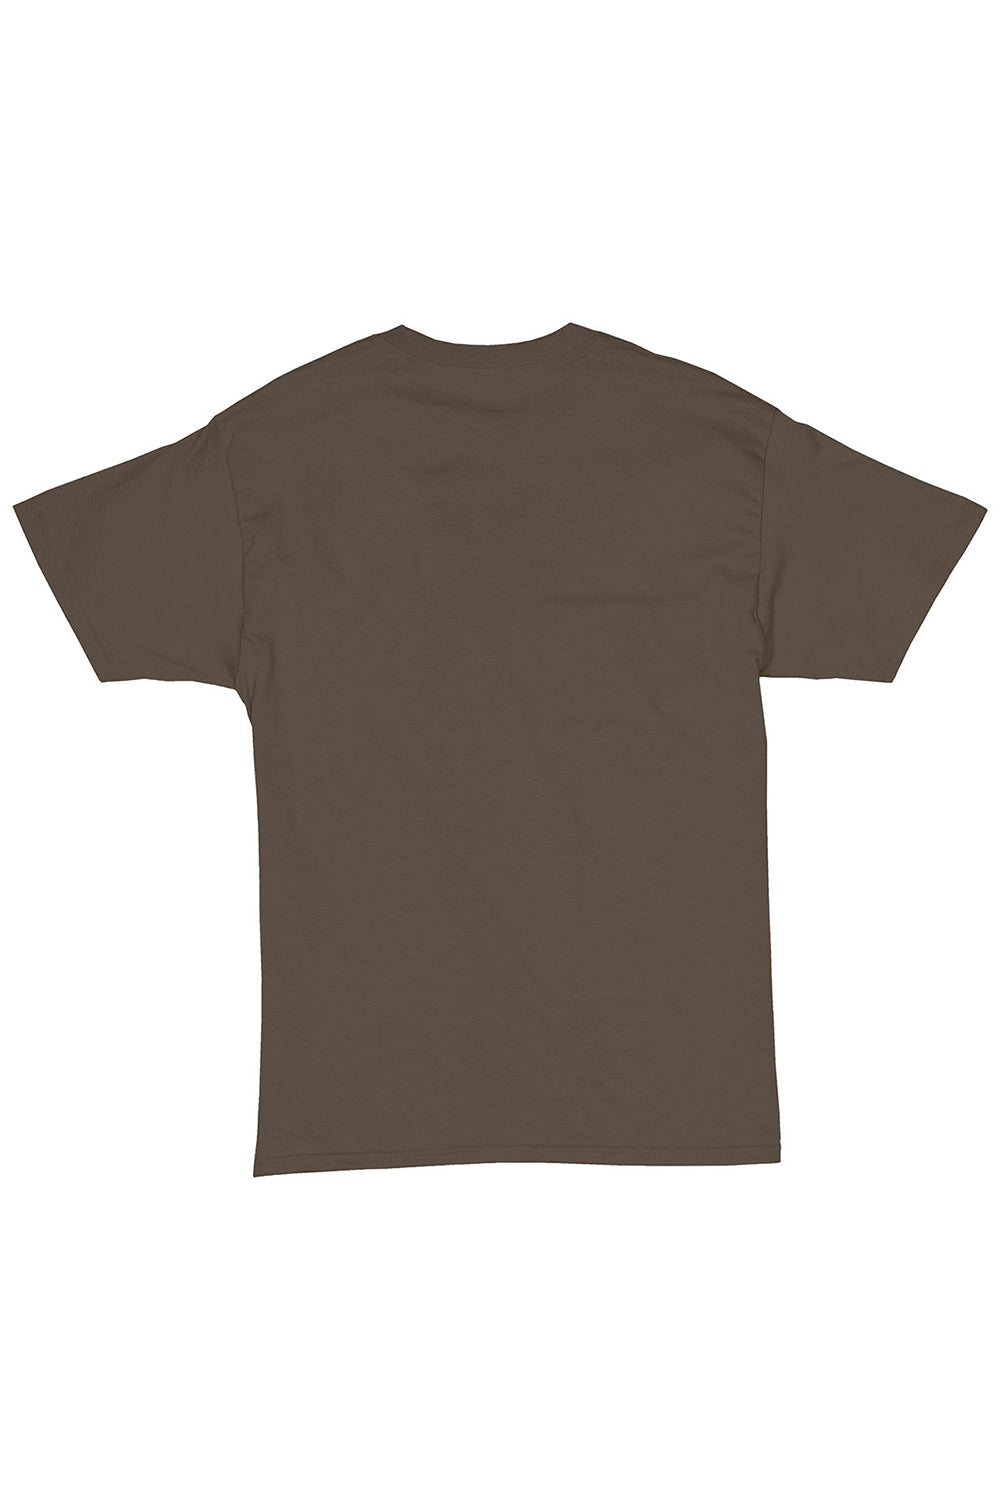 Hanes 5280 Mens ComfortSoft Short Sleeve Crewneck T-Shirt Dark Chocolate Brown Flat Back